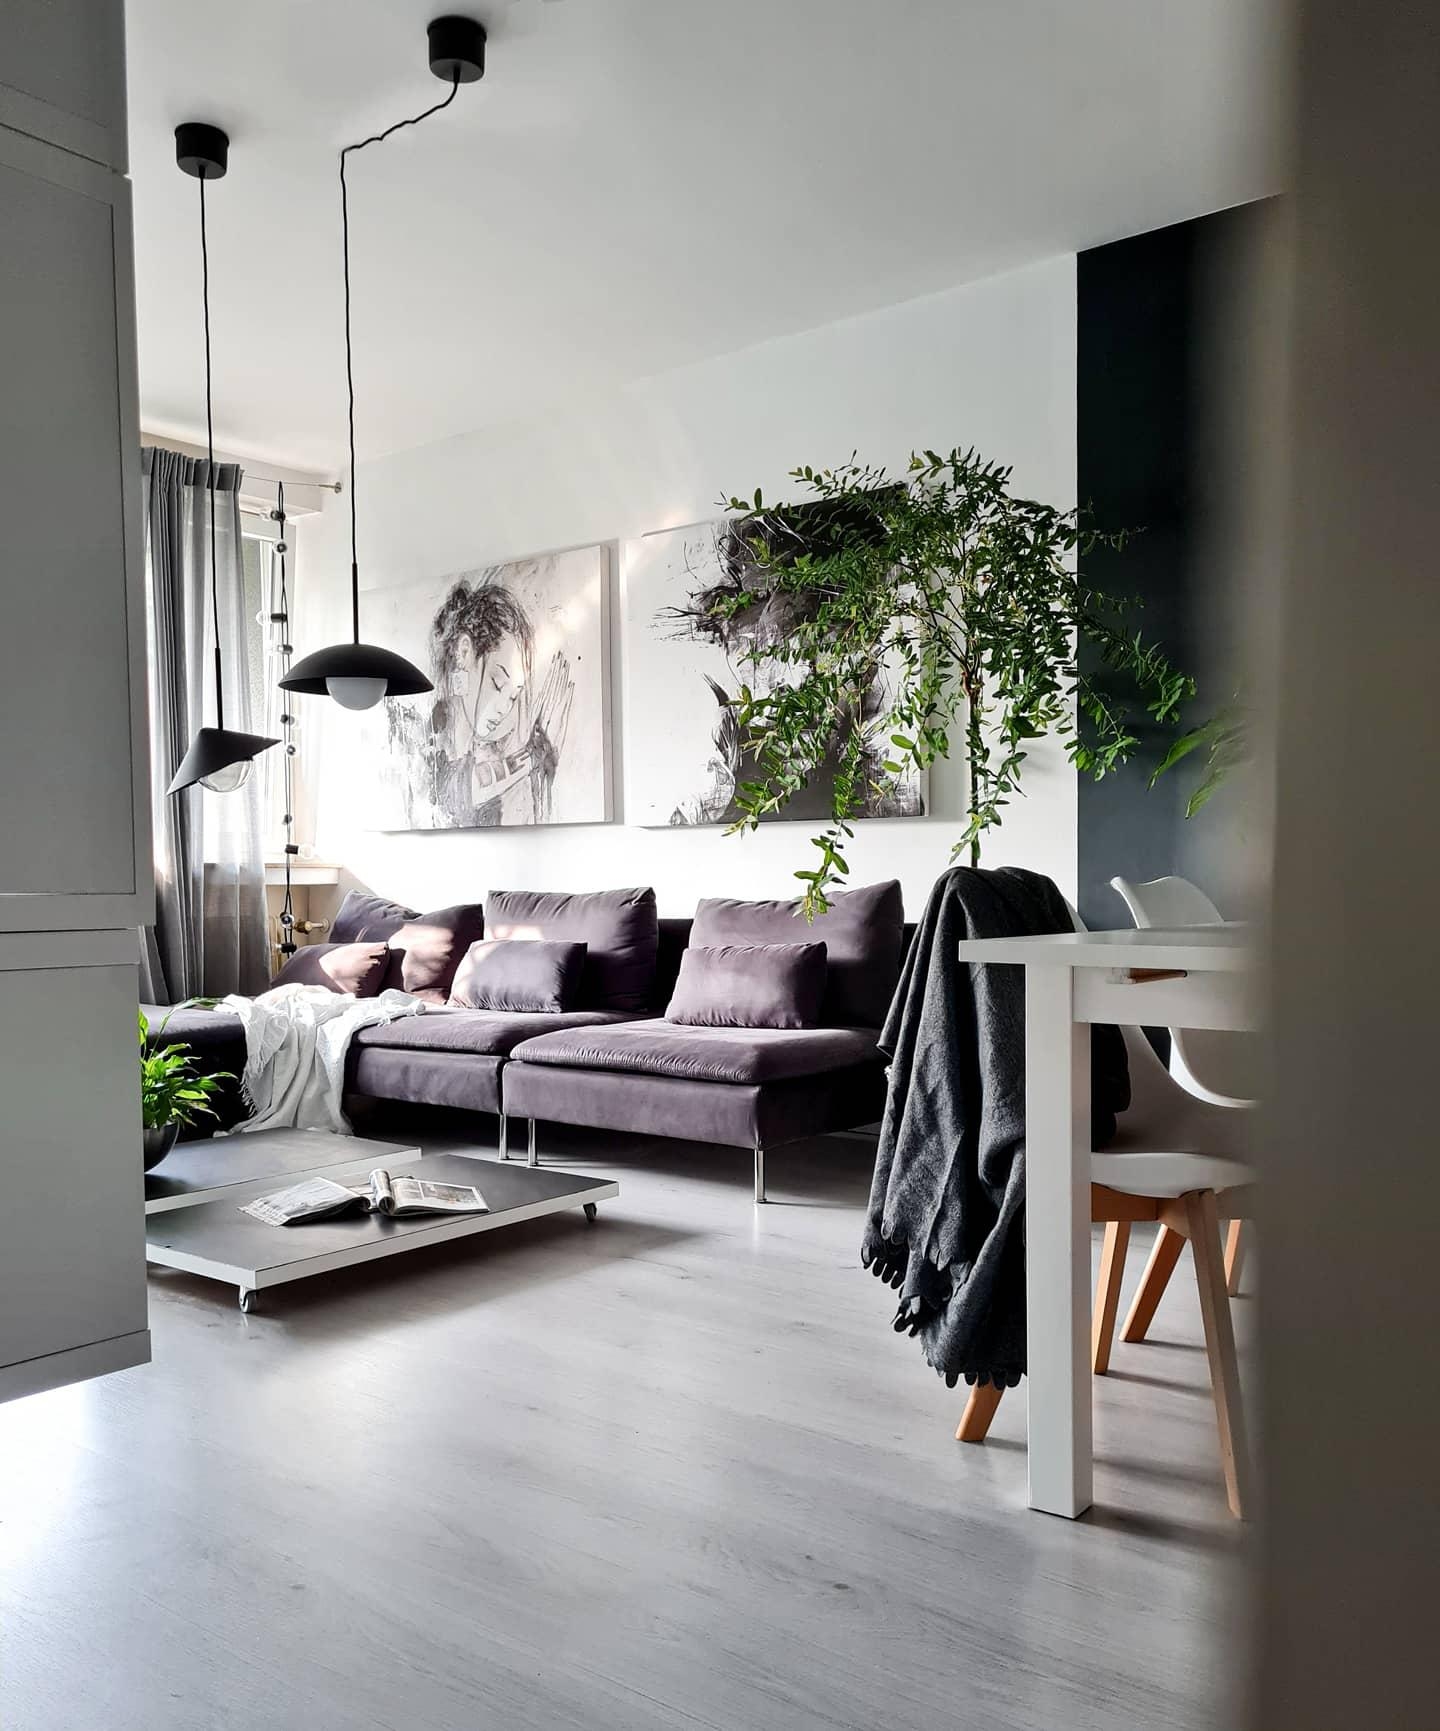 Neue Lampen 🙃✌
#newin #wohnzimmer #livingroom #couch #pflanzen #meinzuhause #livingroominspo